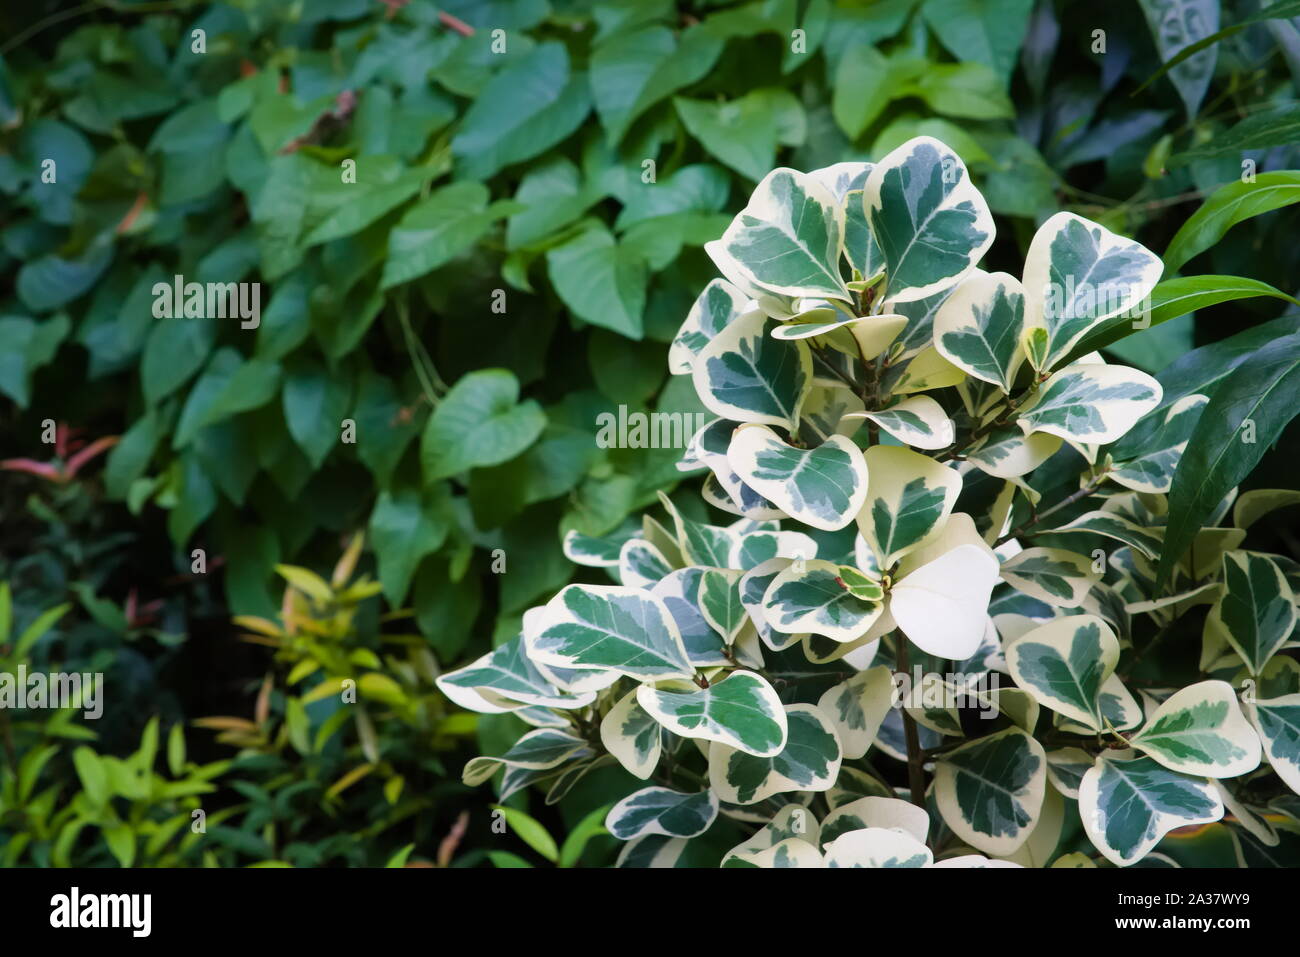 An unusual, white and green leaf bush or shrub, set in a lush tropical garden park, in Bangkok, Thailand. Stock Photo